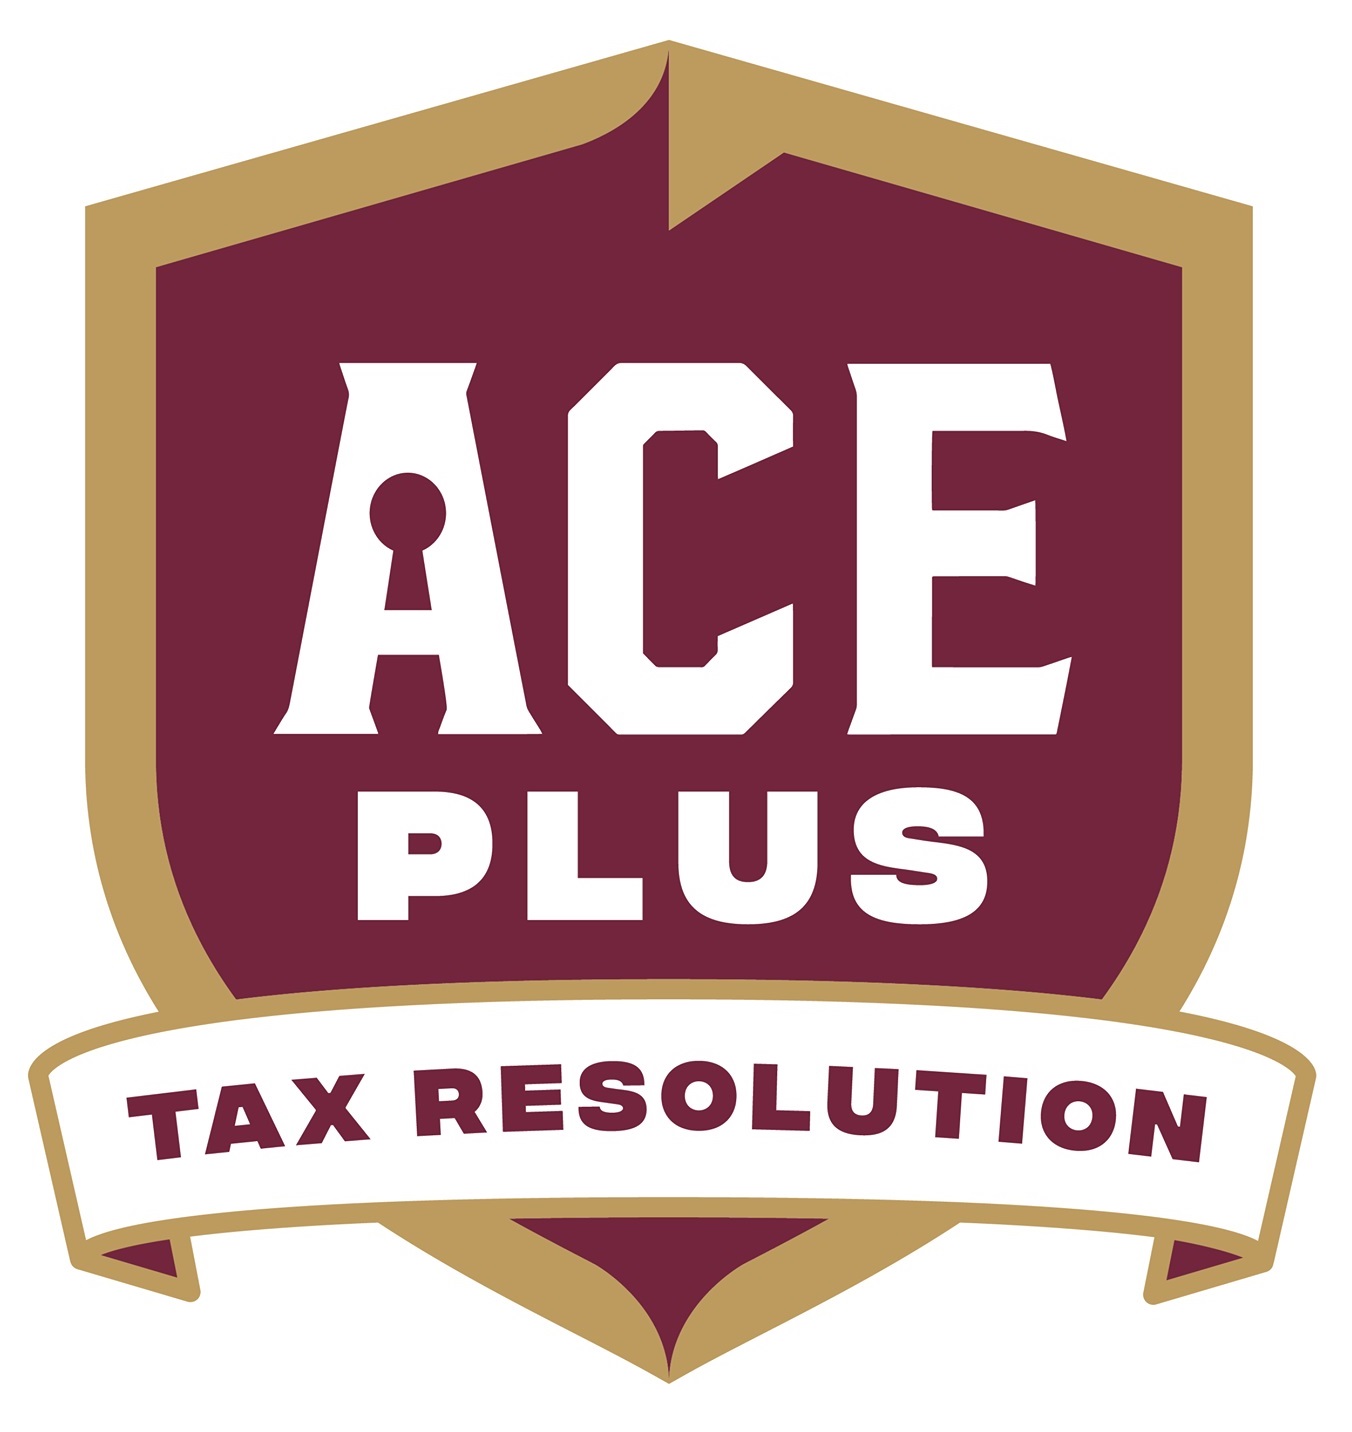 Ace Plus Tax Resolution